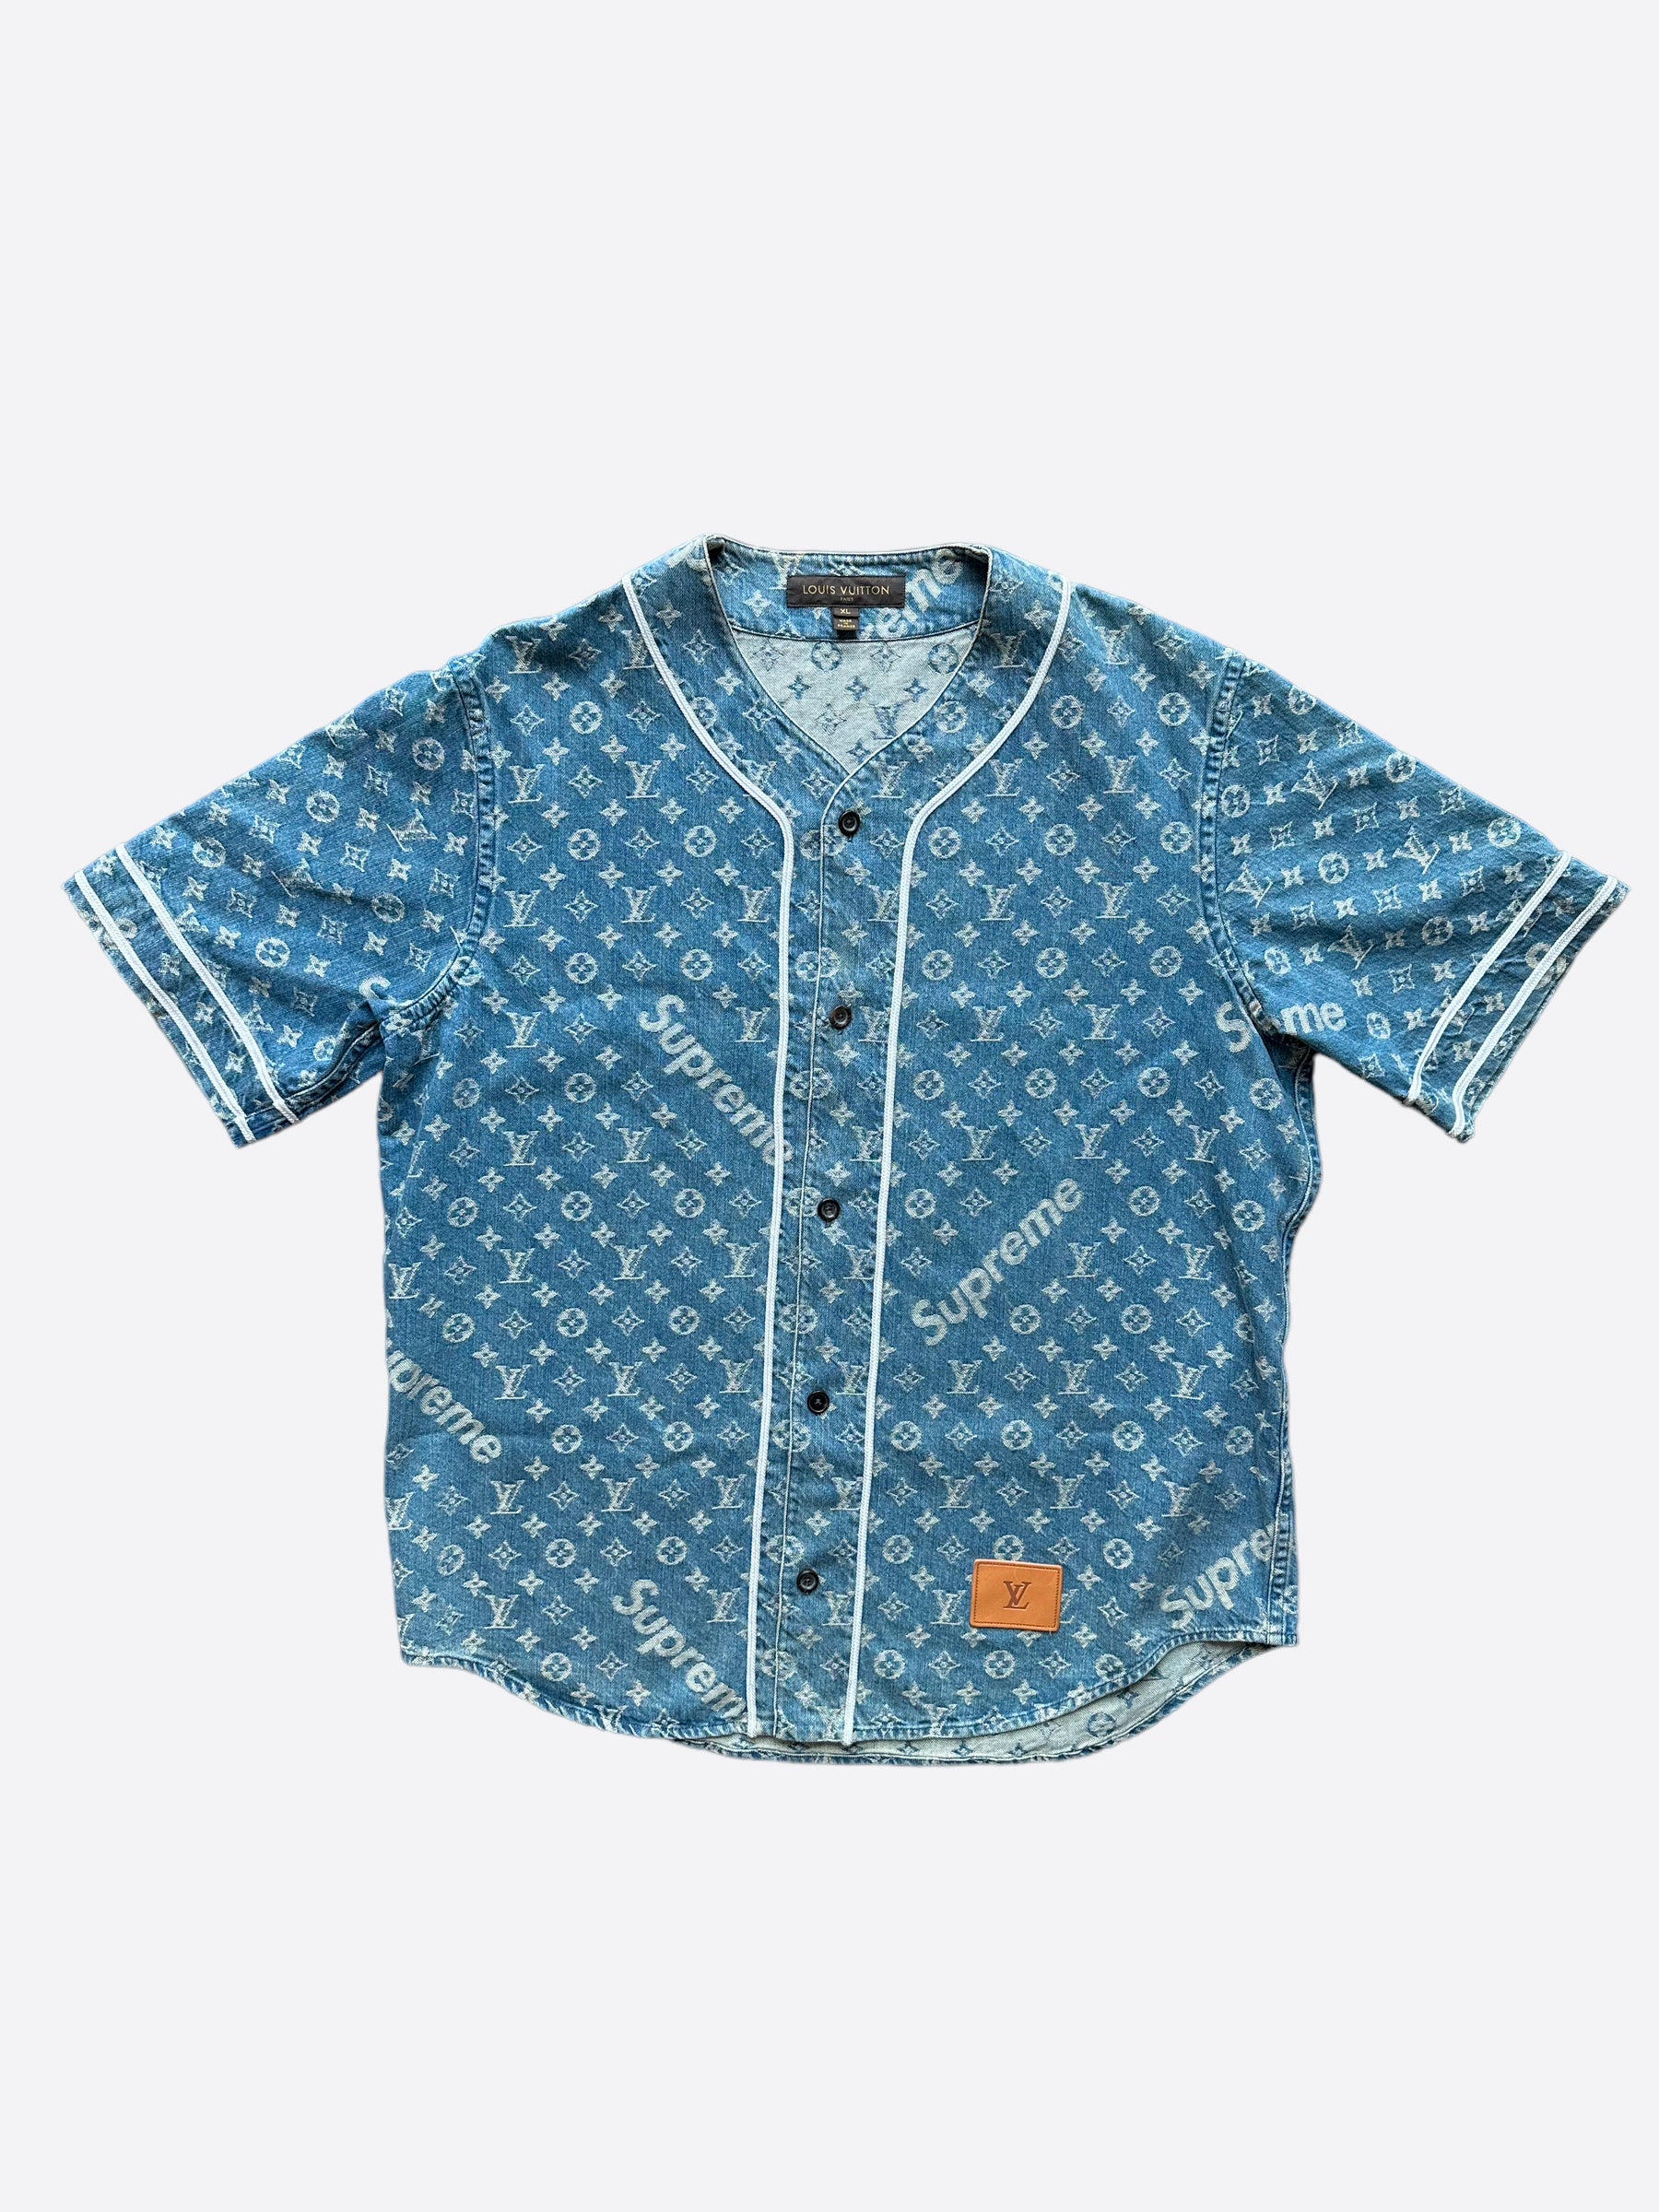 Louis Vuitton Colorful Baseball Jersey Shirt - USALast